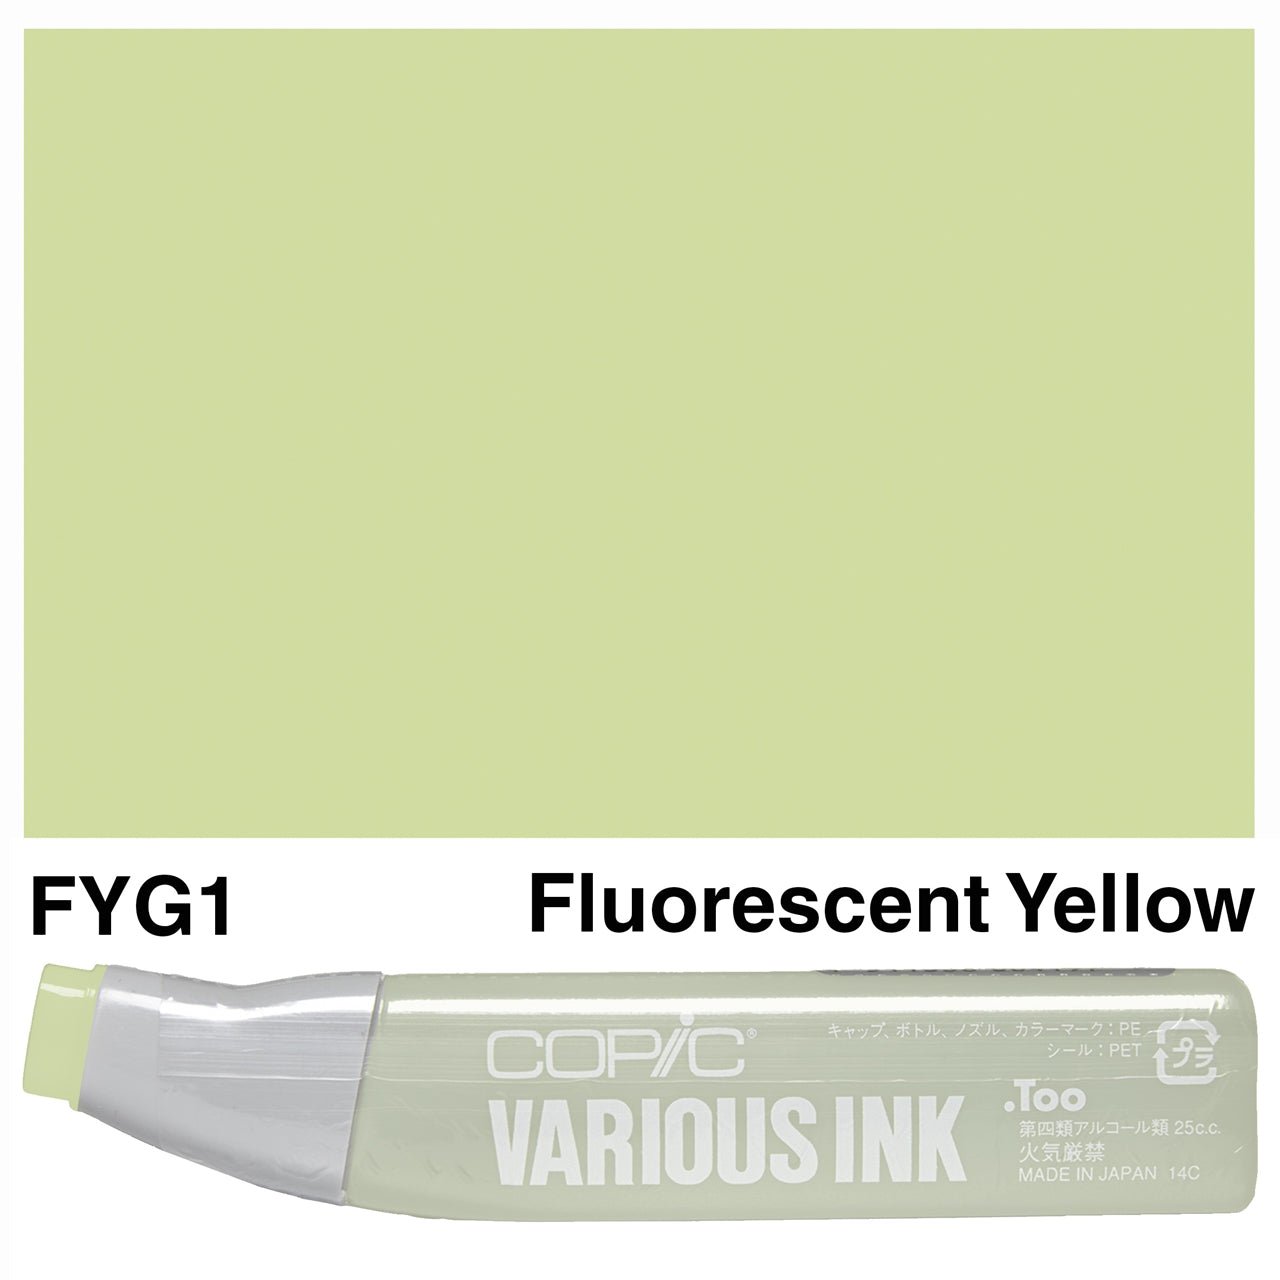 Copic Various Ink FYG1 Fluorescent Yellow - theartshop.com.au